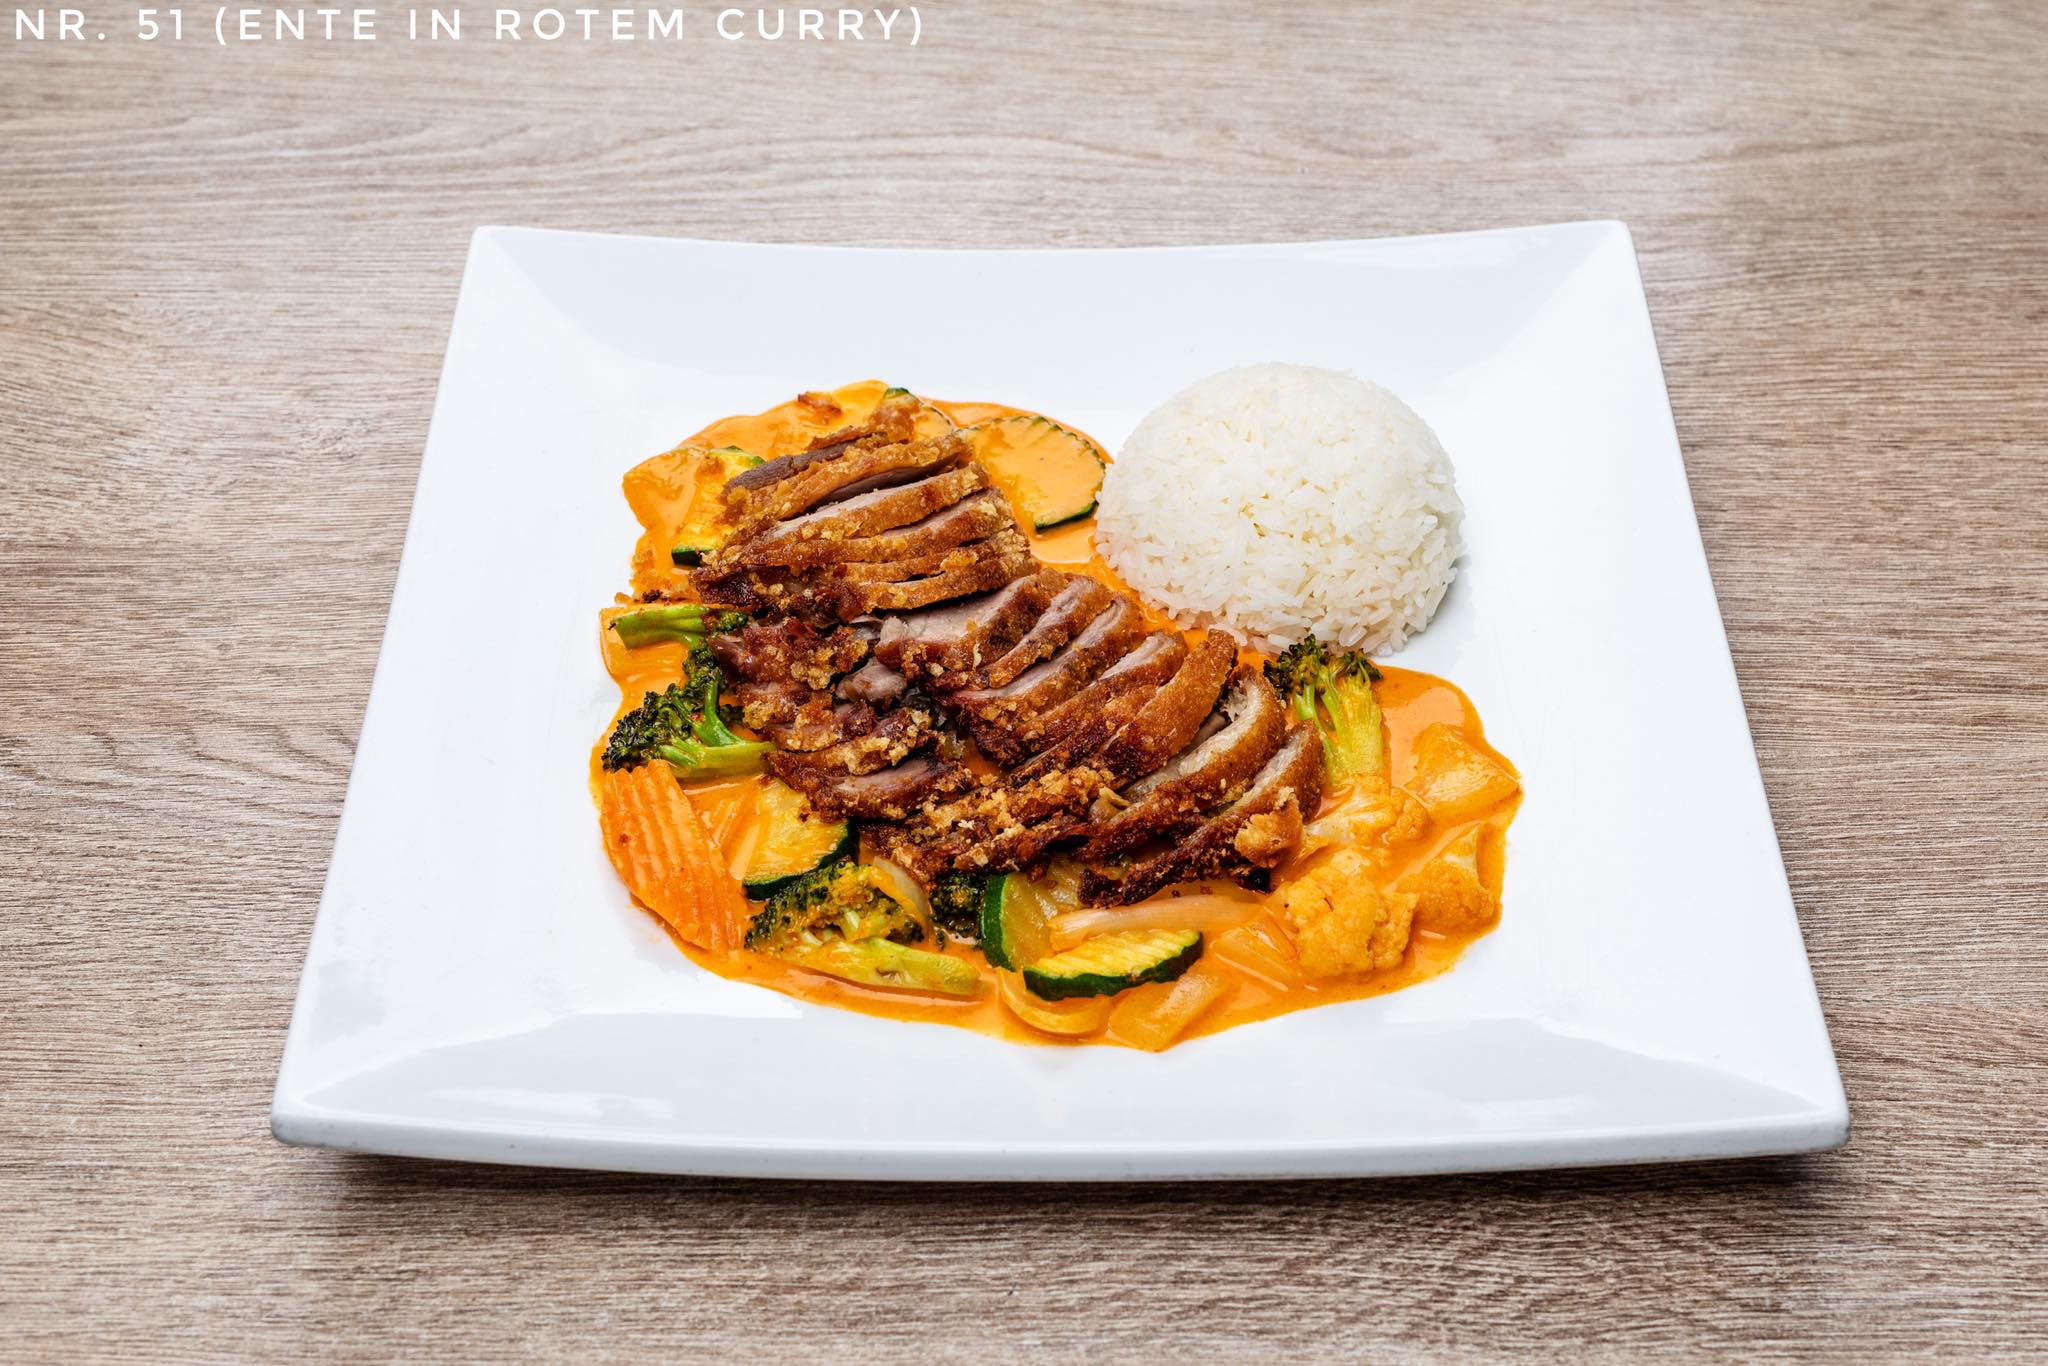 51. Reis Ente Knusprig Rot Curry - Sushi Bar - Hot Wok